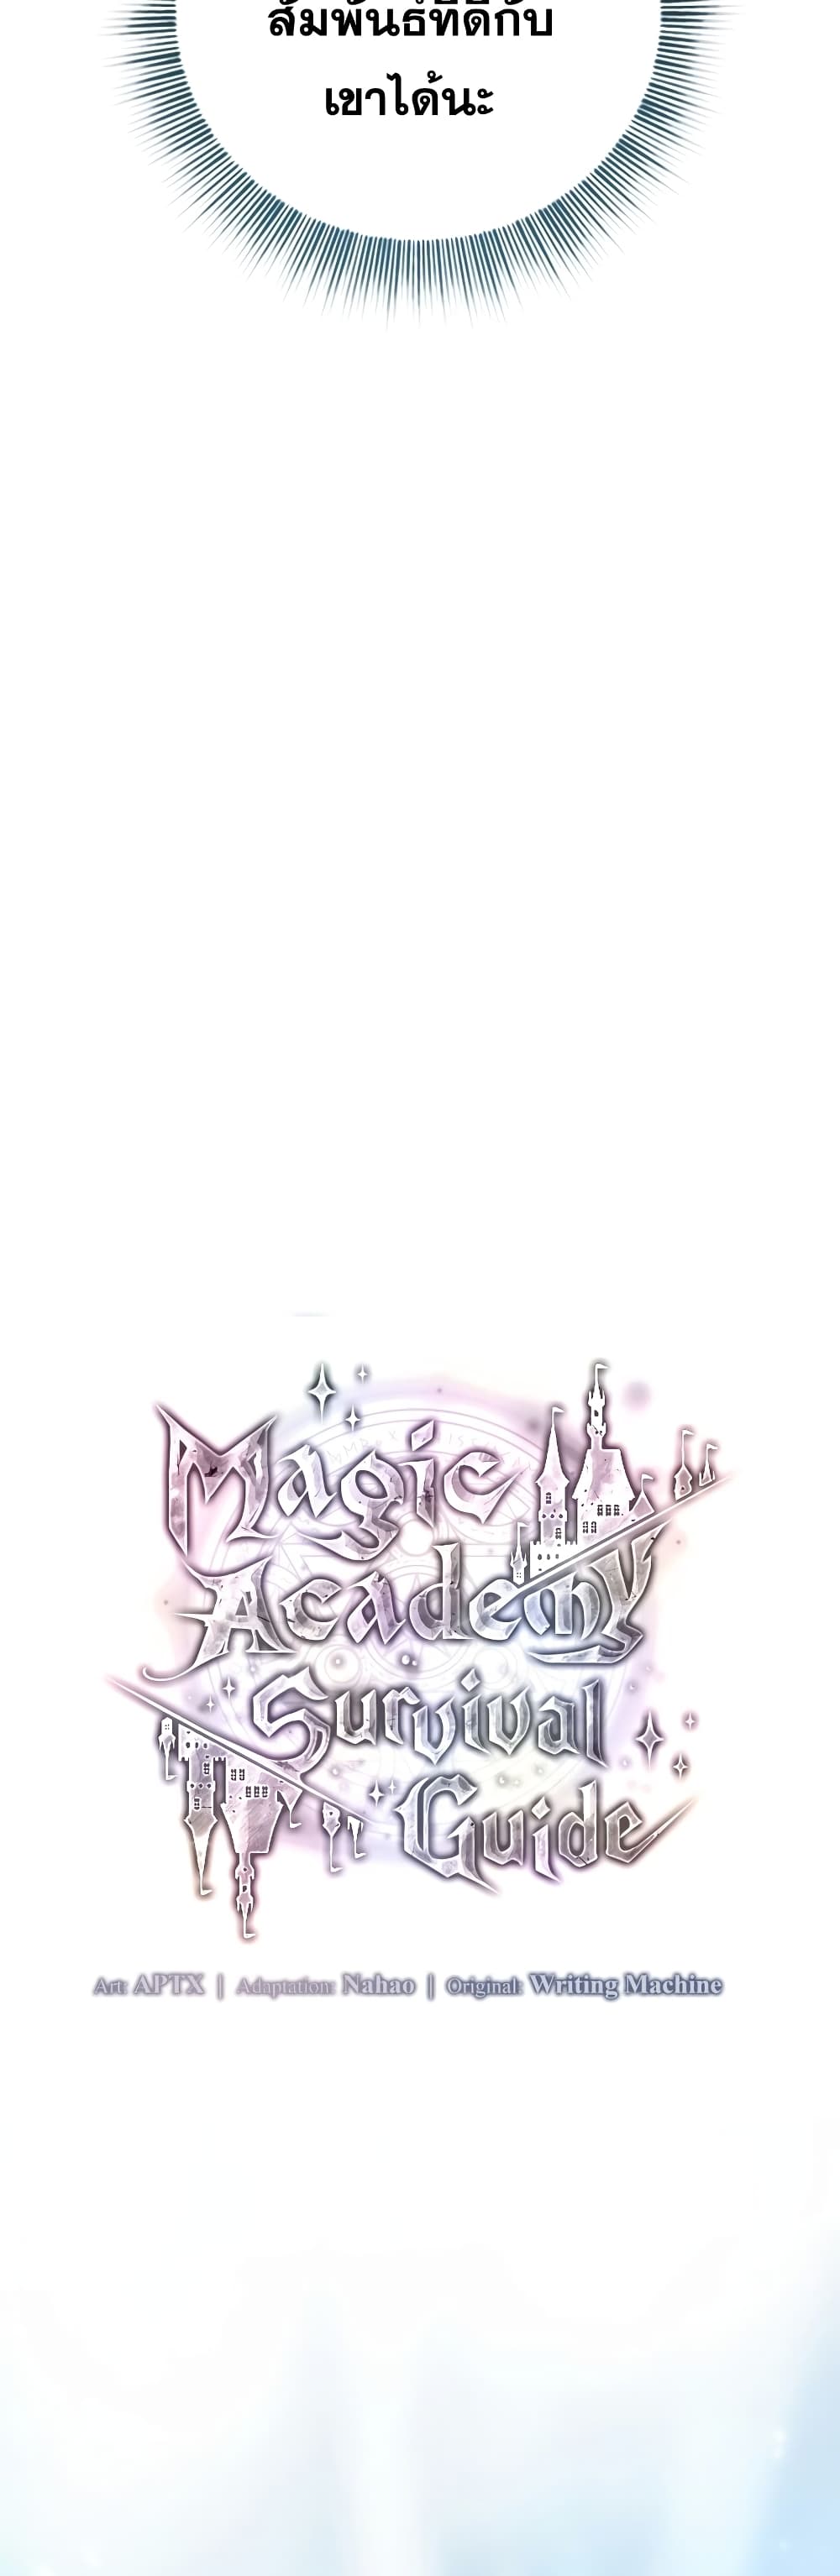 Magic Academy Survival Guide 16-16